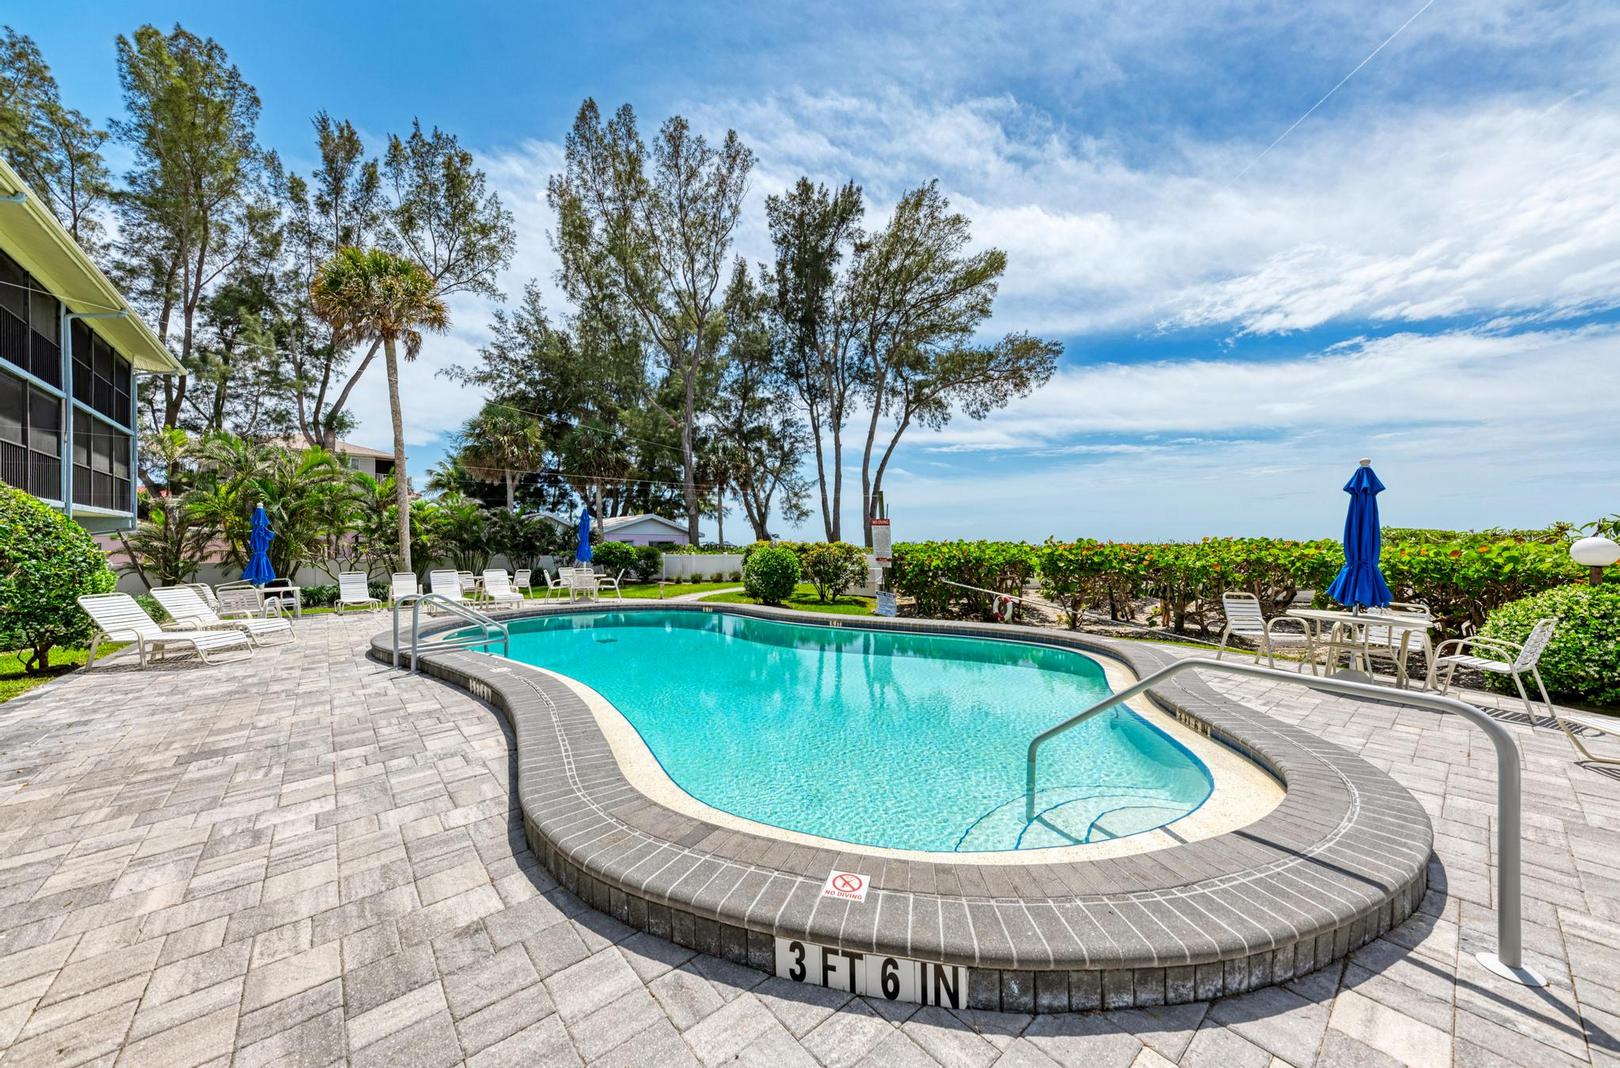 Sunset Beach 102 condo shared pool view towards the Gulf coast